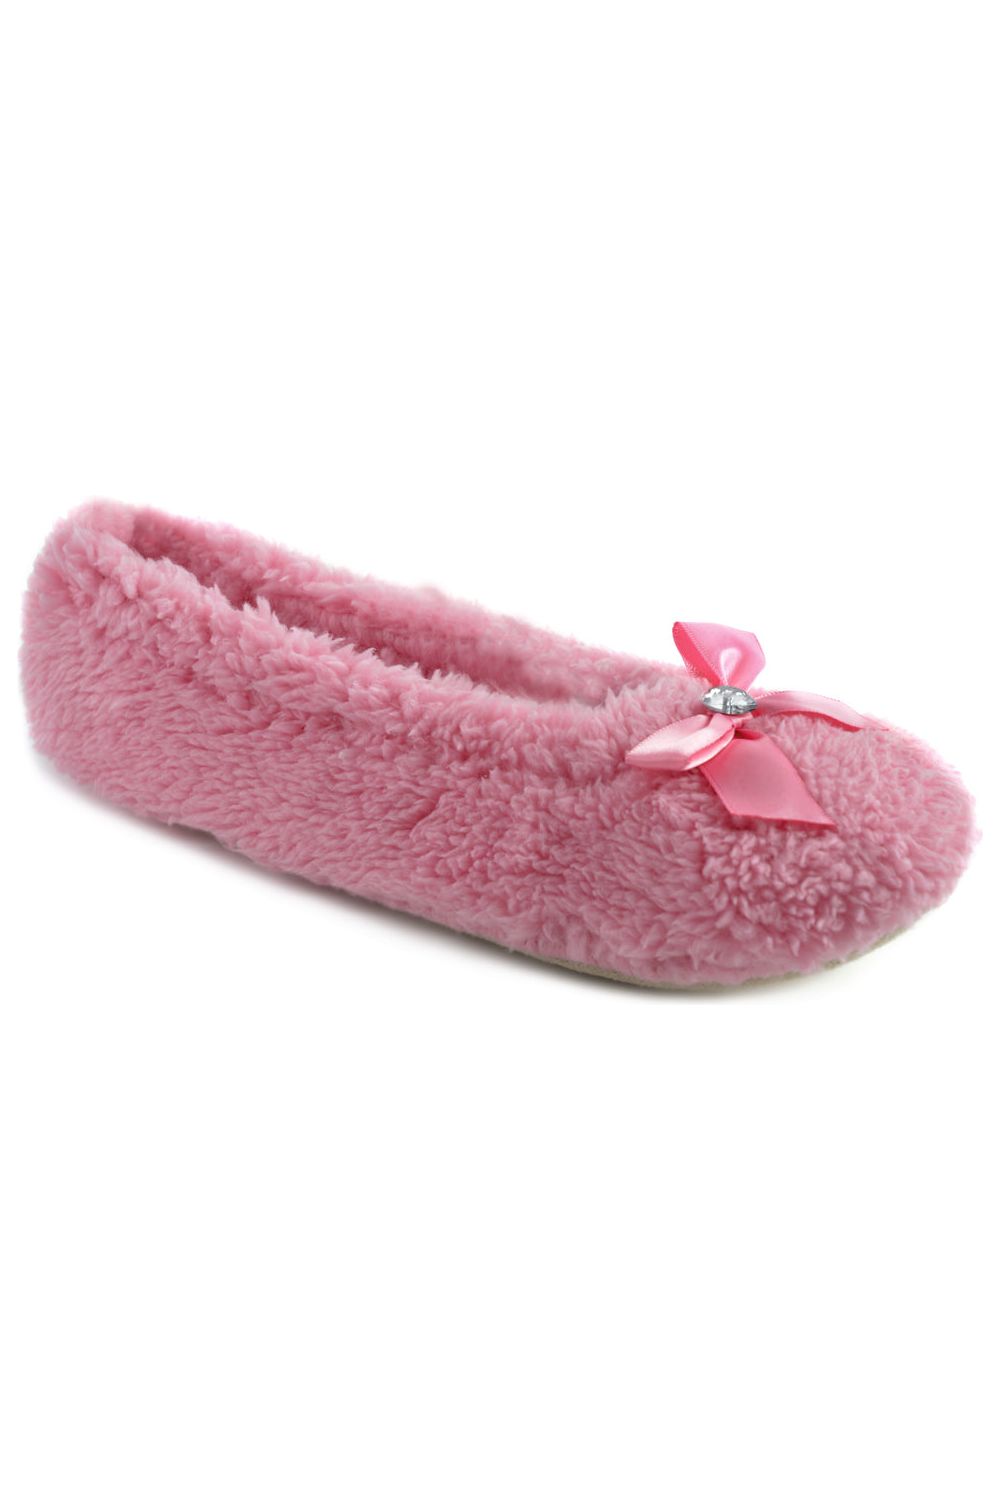 Women's Pink Fluffy Ballet Slippers